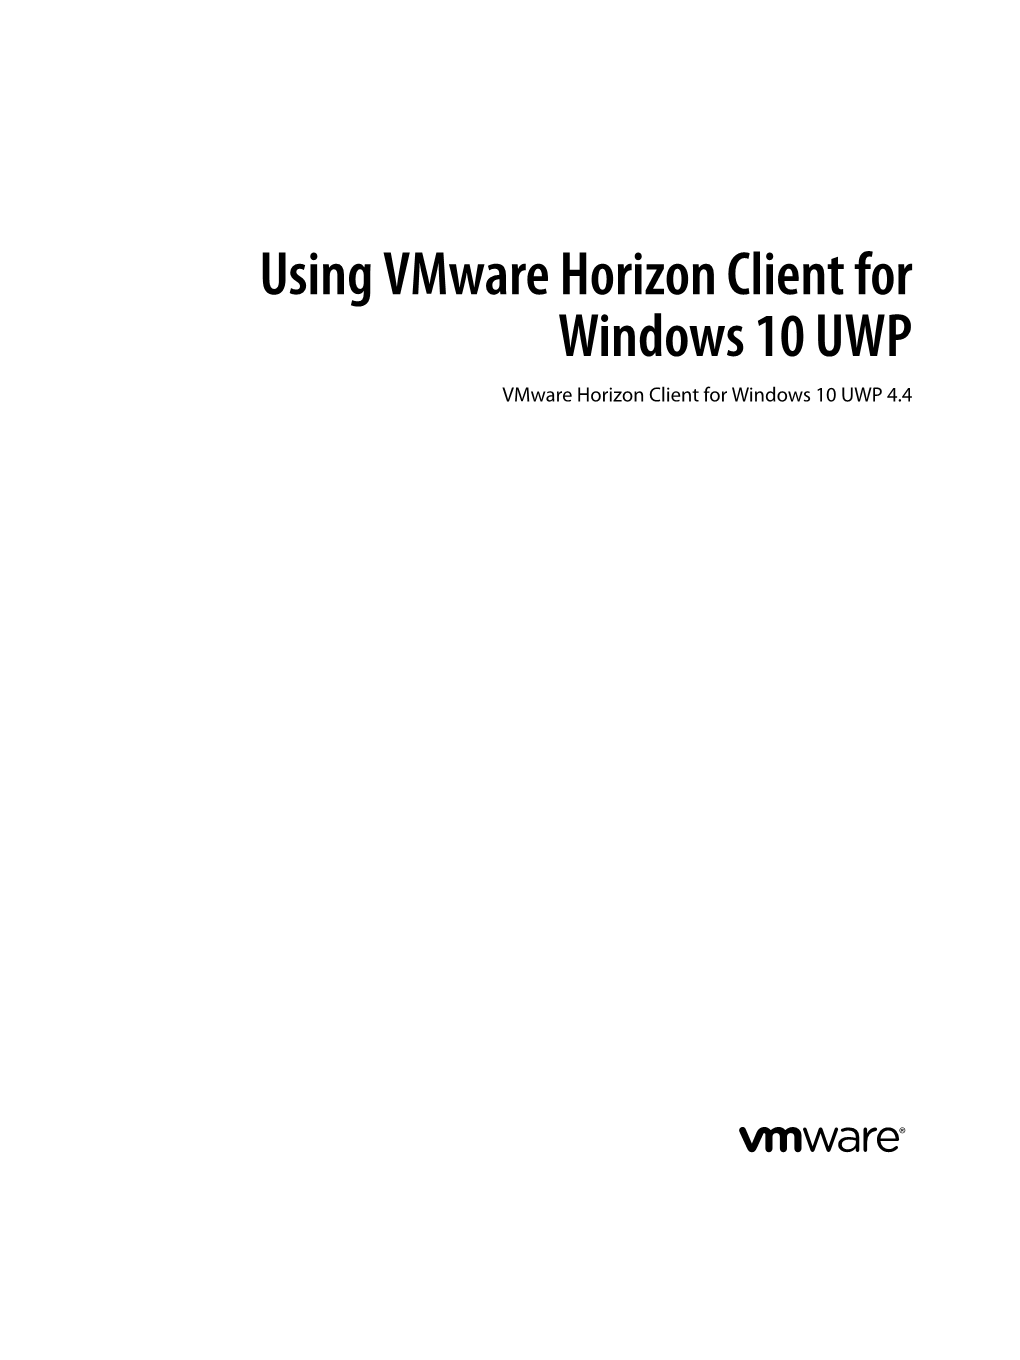 Vmware Horizon Client for Windows 10 UWP Vmware Horizon Client for Windows 10 UWP 4.4 Using Vmware Horizon Client for Windows 10 UWP